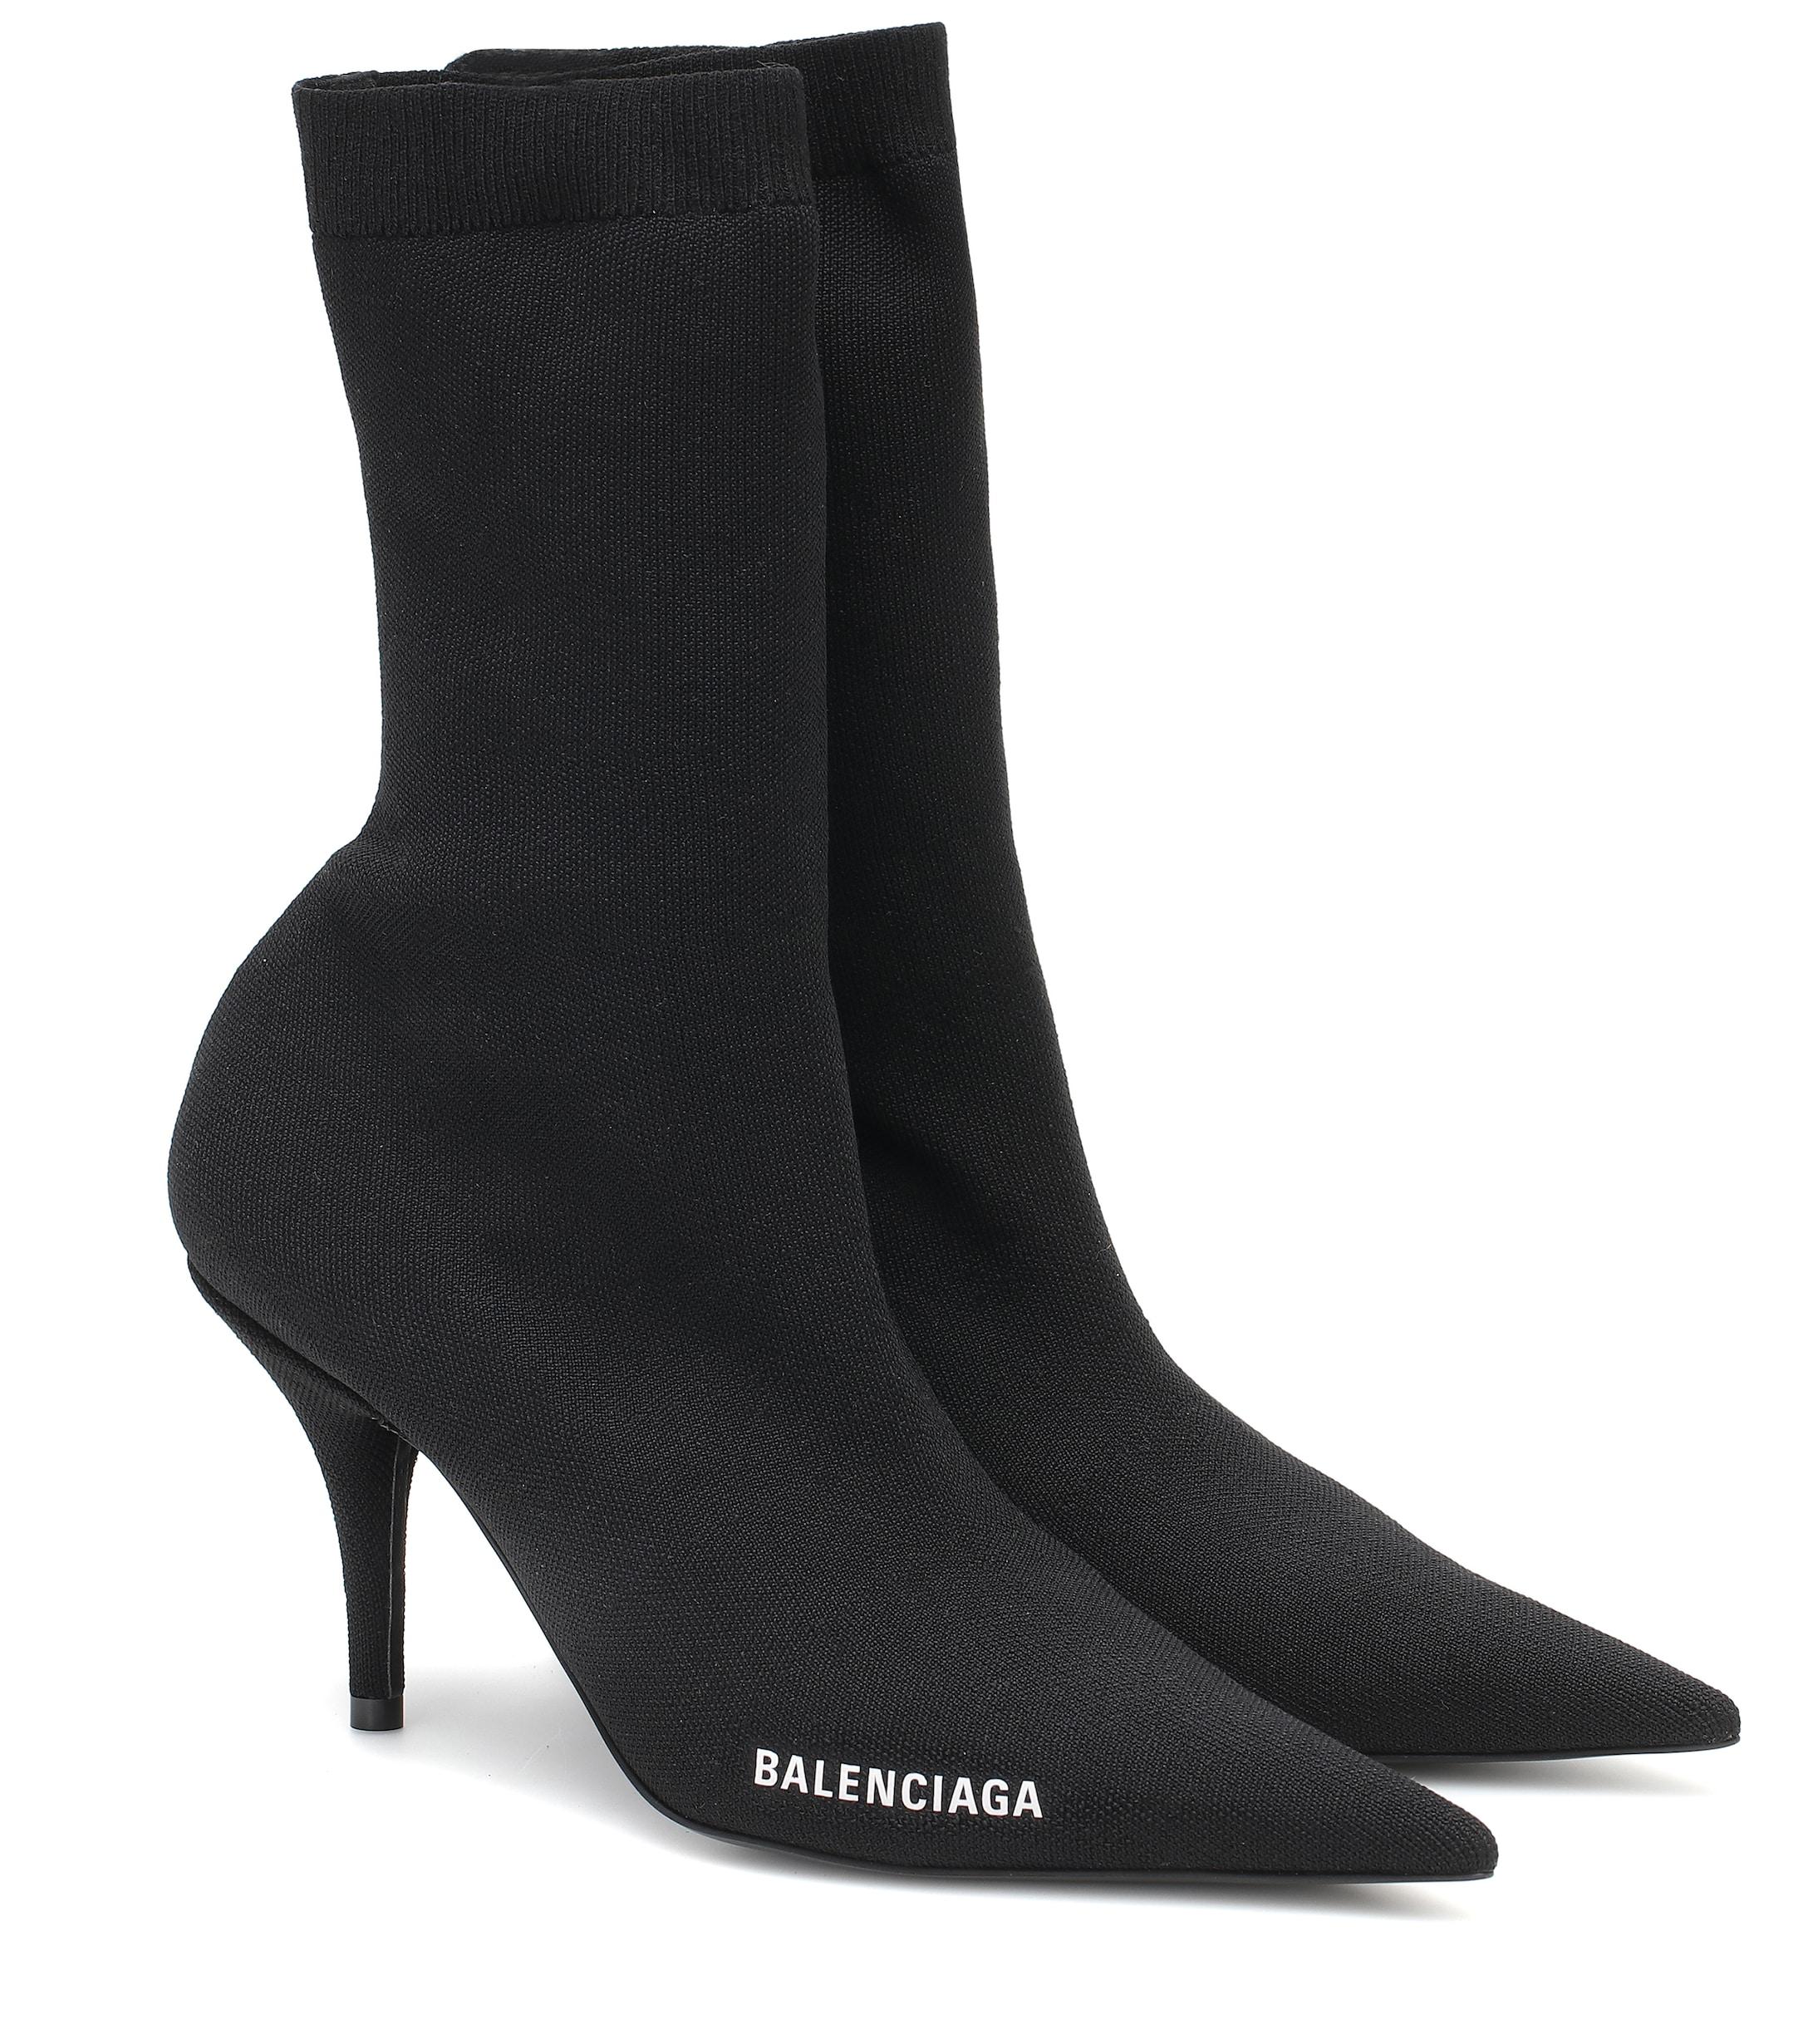 Balenciaga Rubber Knife Sock Boots in Black - Lyst